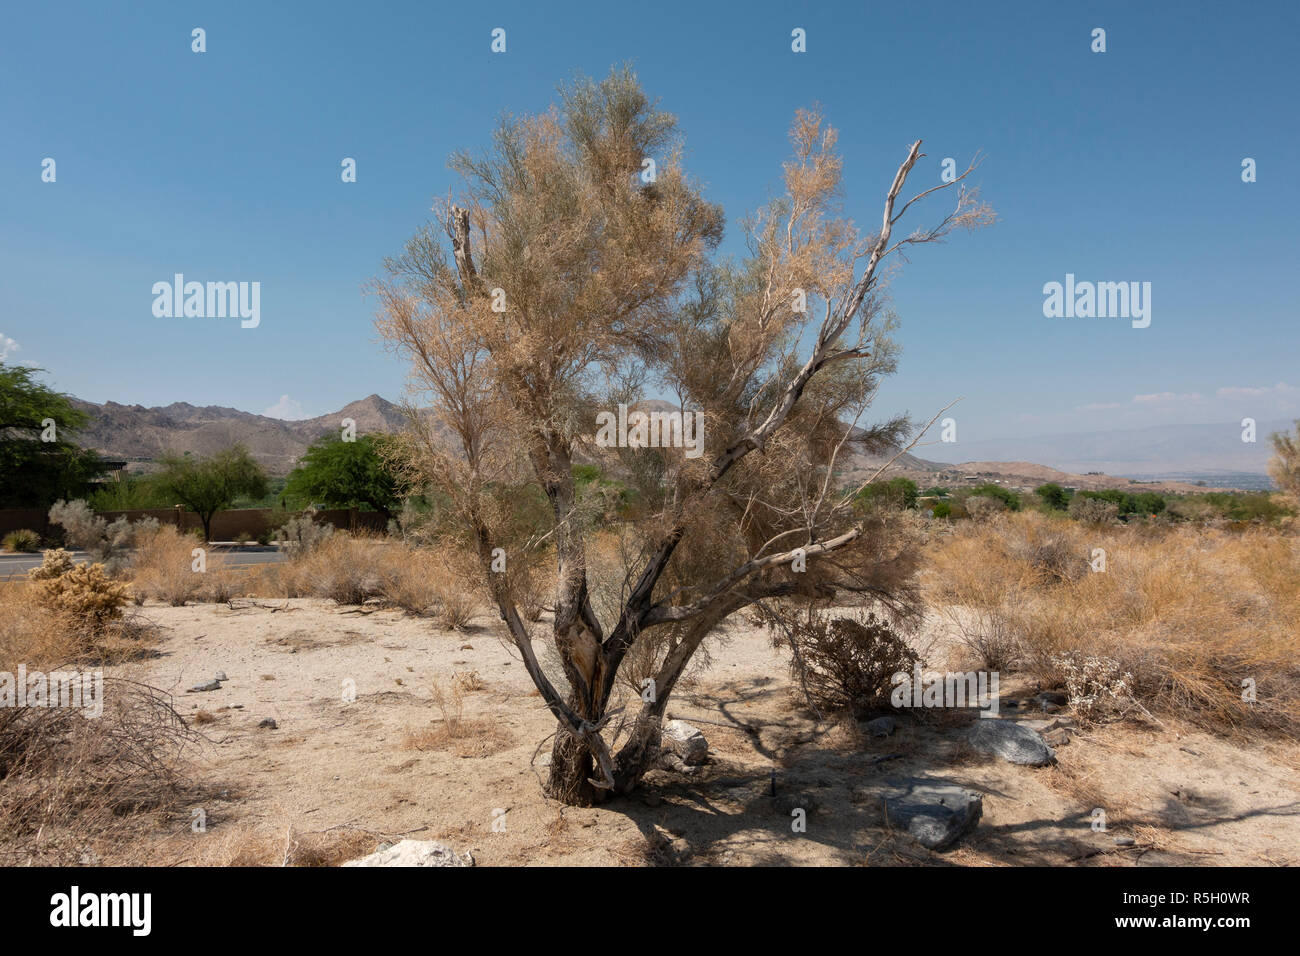 Albero di fumo (Psorothamnus spinosus), Ed Hastey Garden Trail, Santa Rosa e San Jacinto Mountains National Monument, Palm Desert, CA, Stati Uniti d'America. Foto Stock